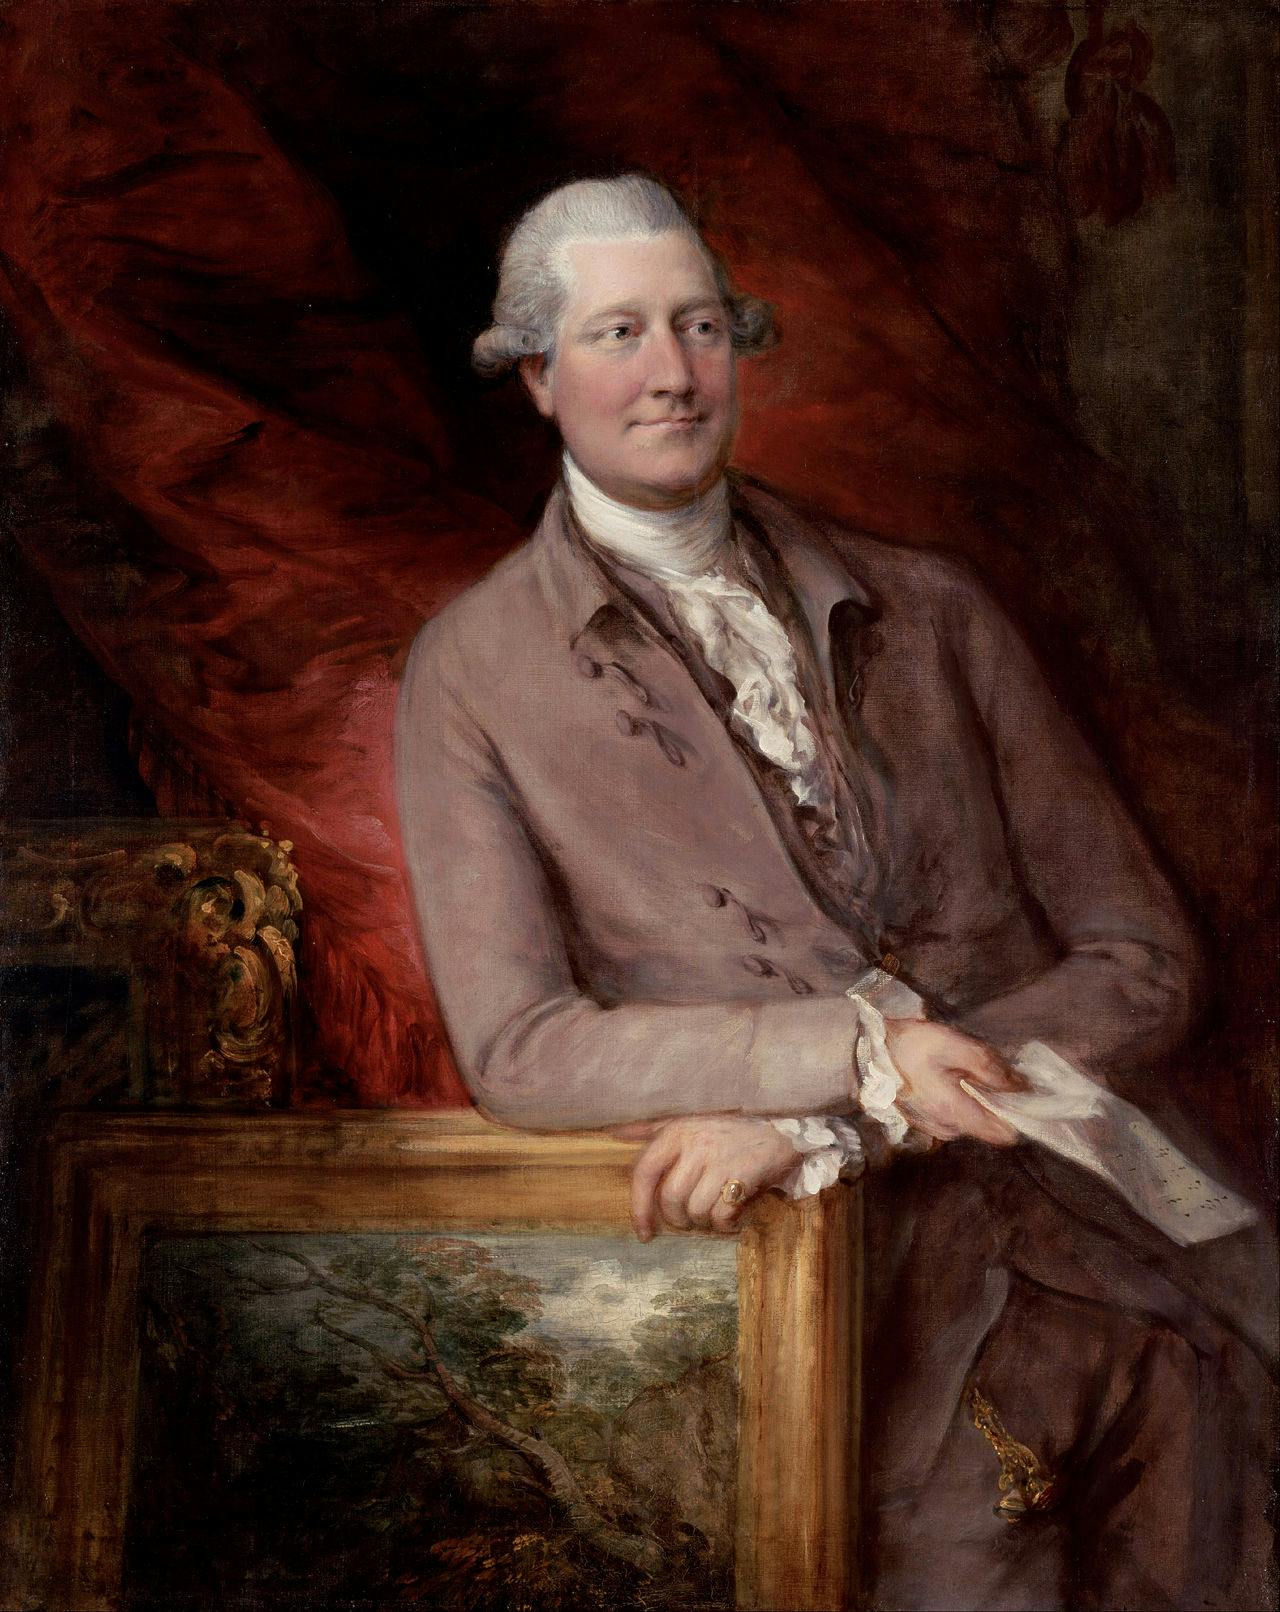 A portrait of James Christie painted by Thomas Gainsborough.